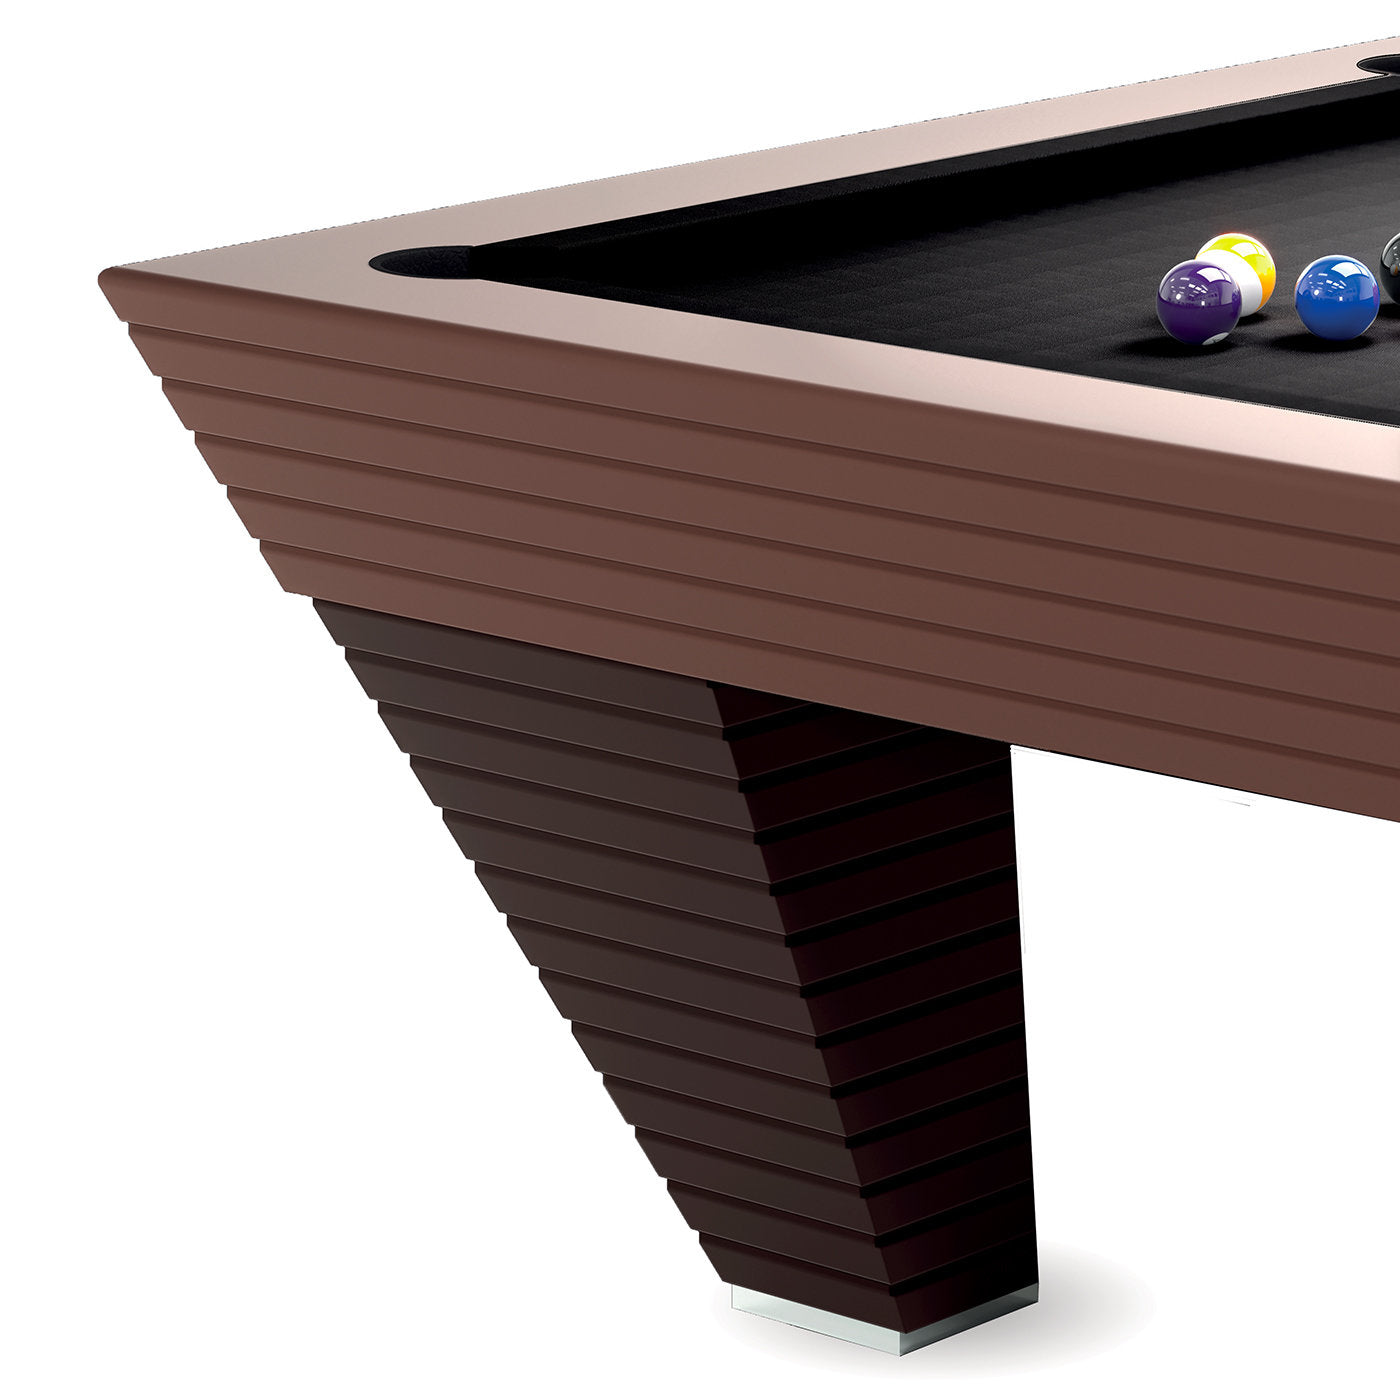 NewDe pool table by Pino Vismara - Alternative view 2